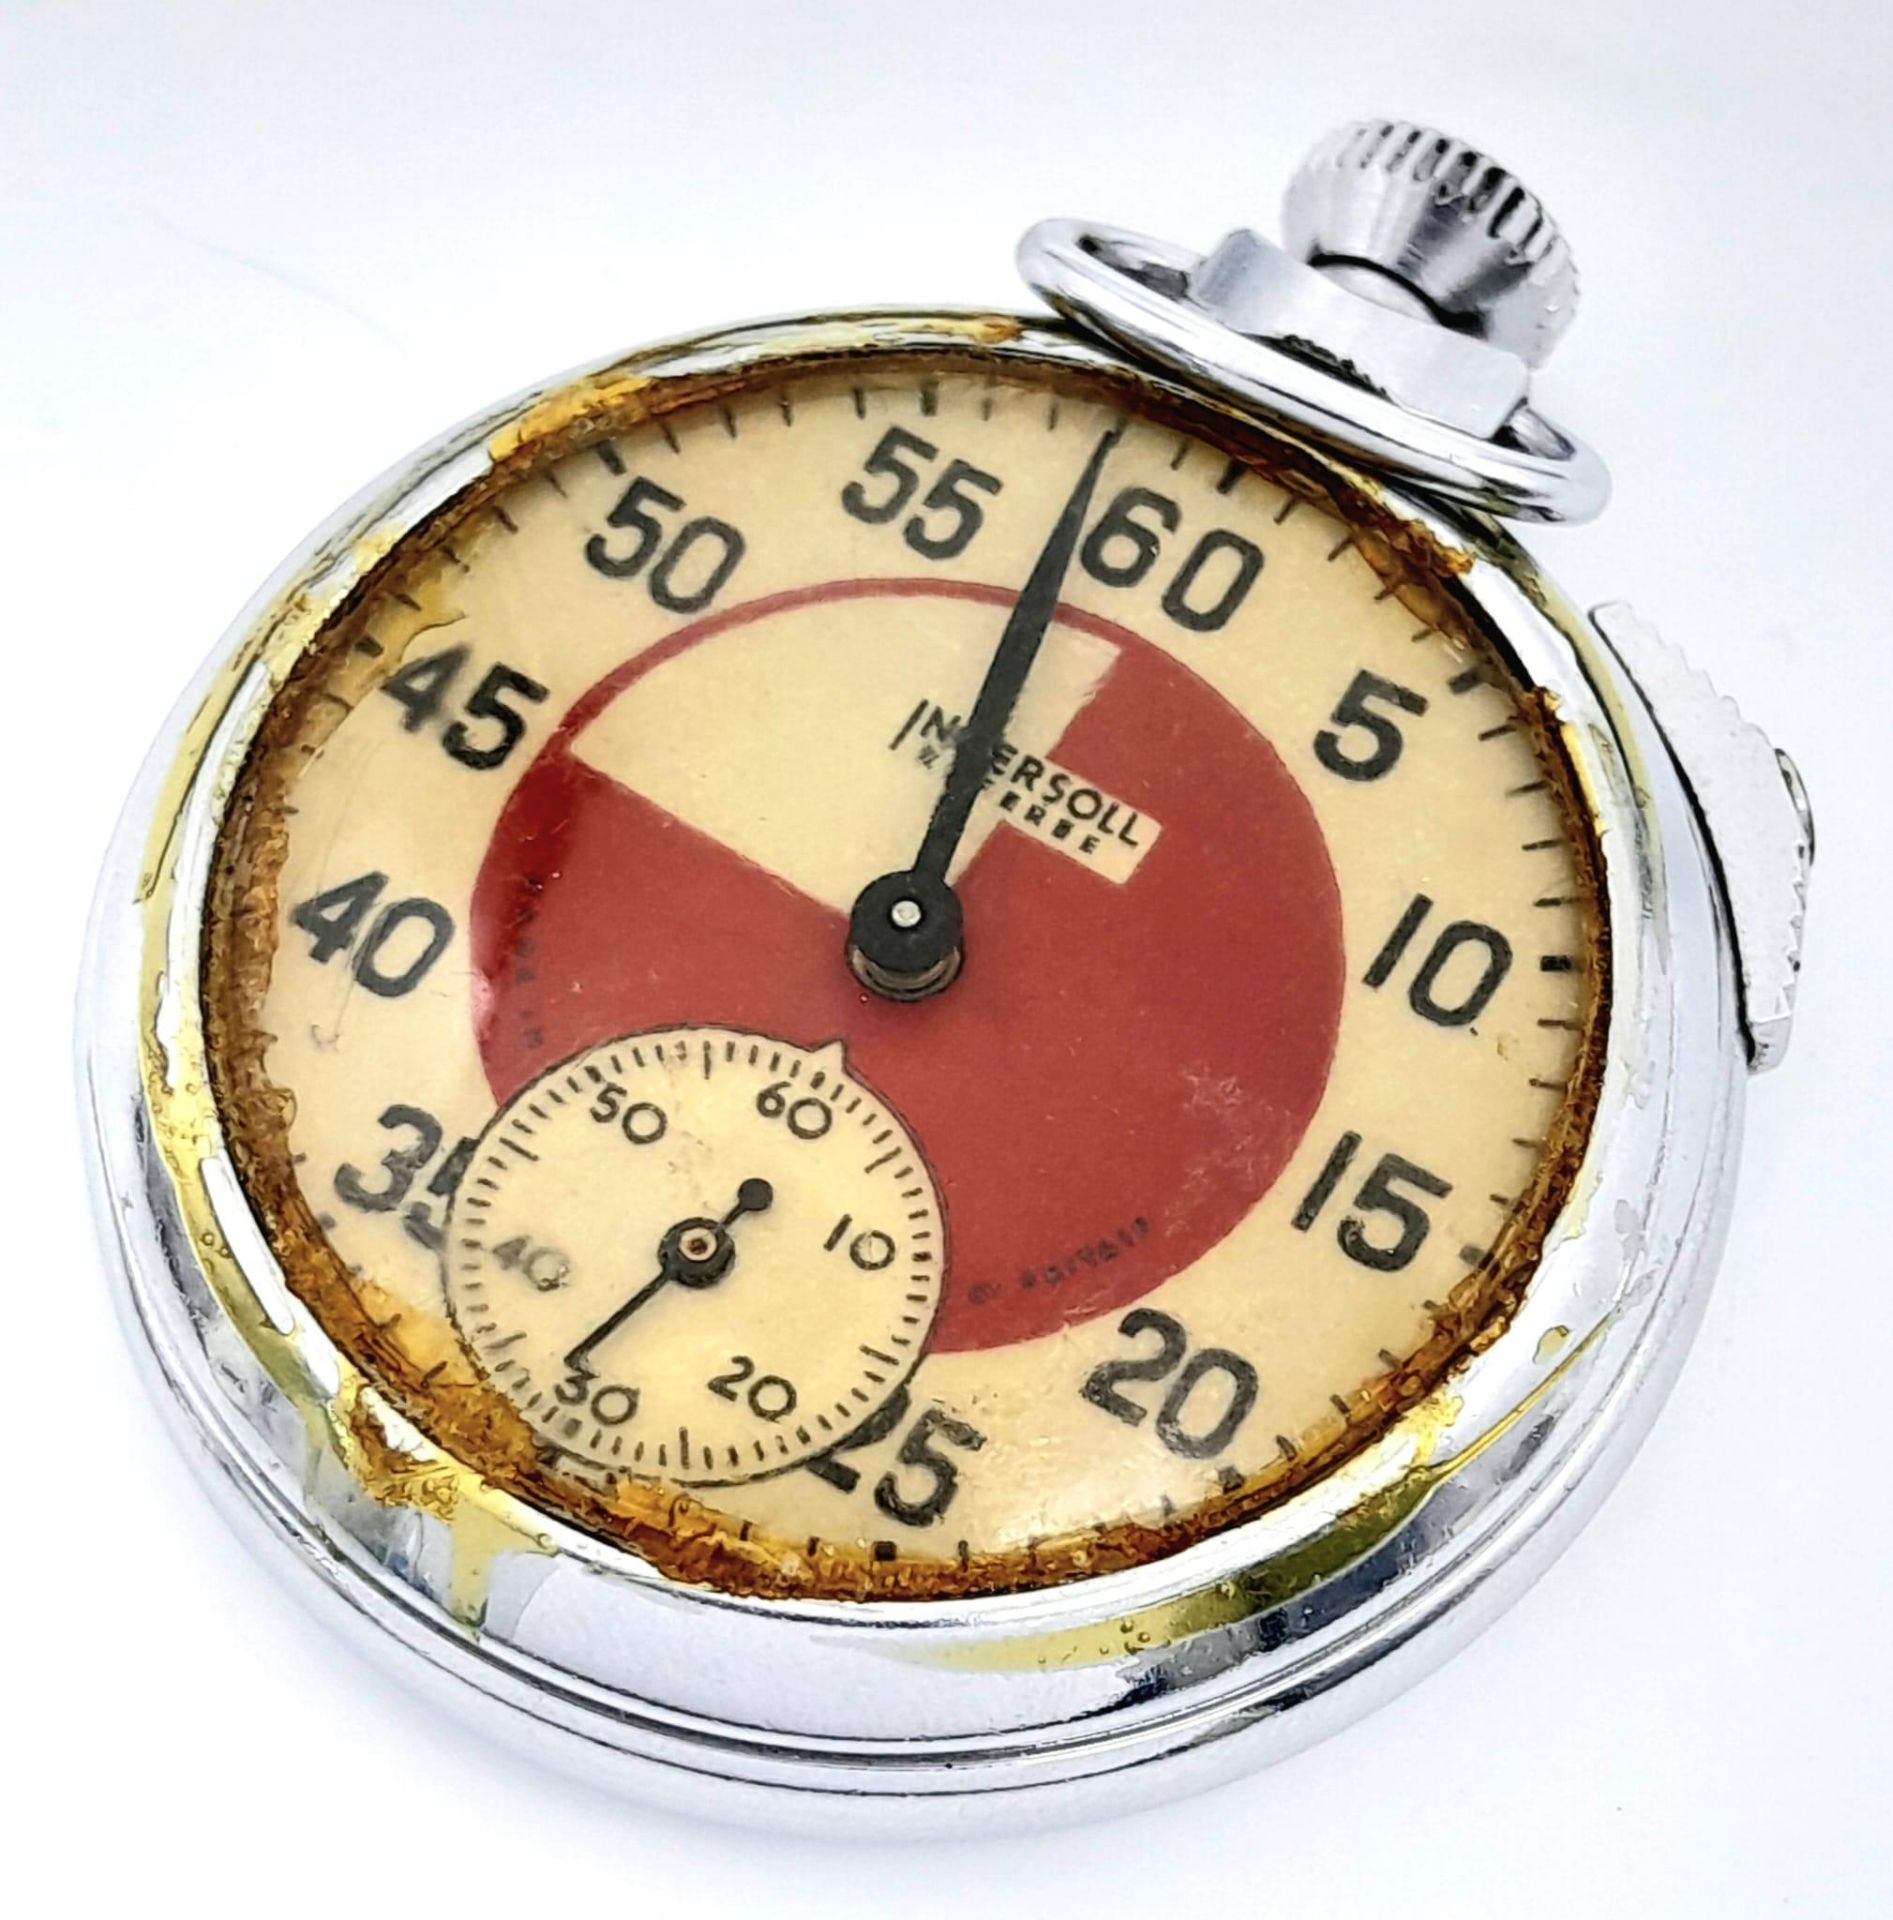 A Fantastic Vintage Ingersoll Football Referees Pocket Watch. 51mm diameter. Works but no